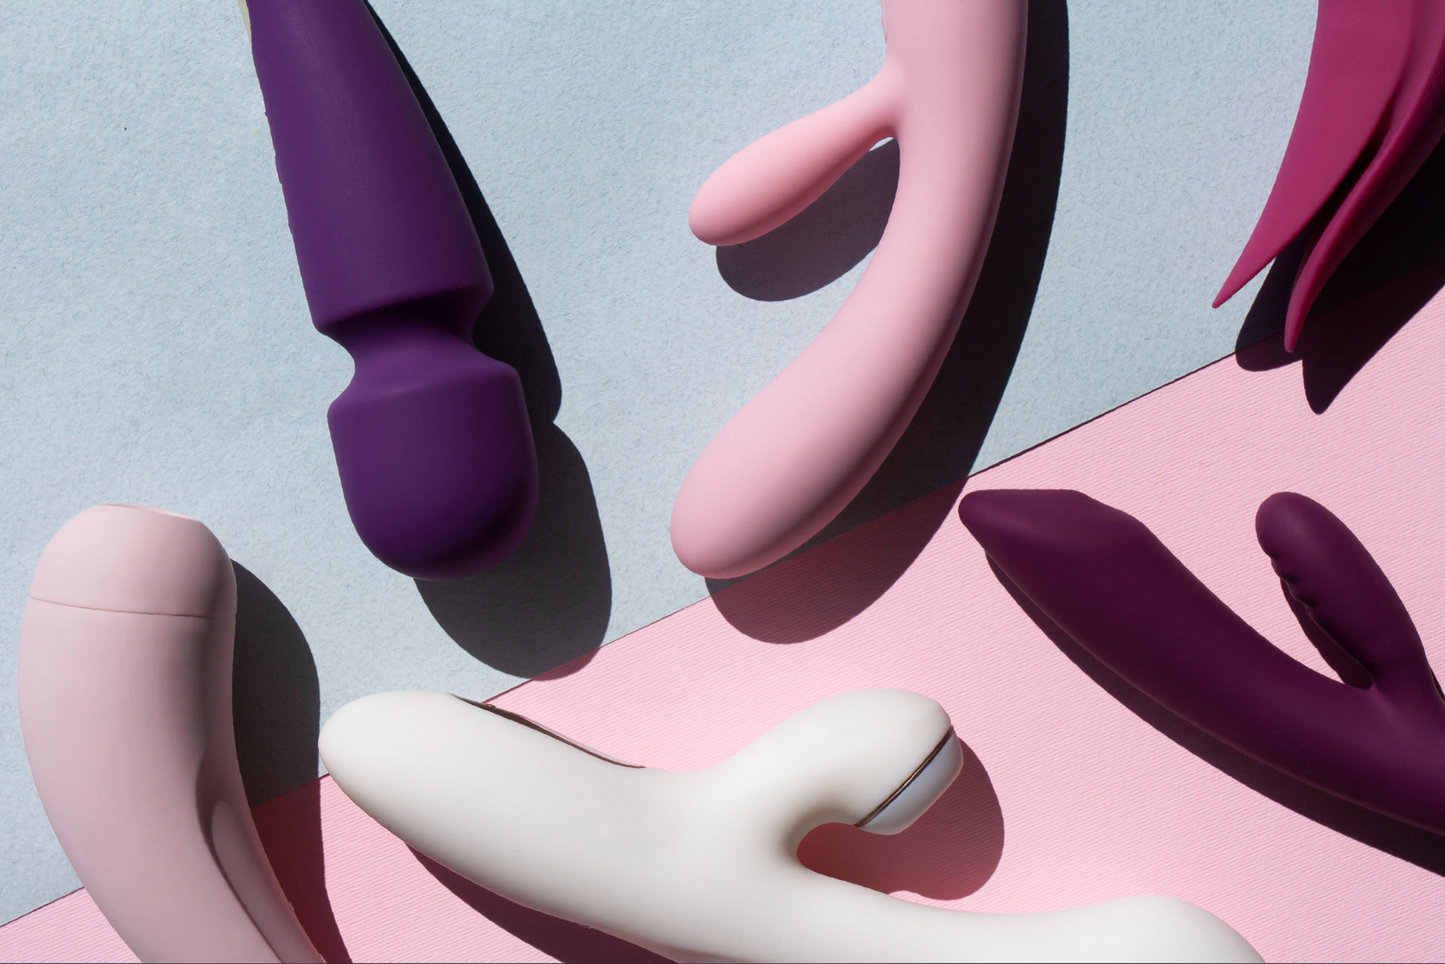 purple-pink-white-vibrators-sex-toys-pink-background